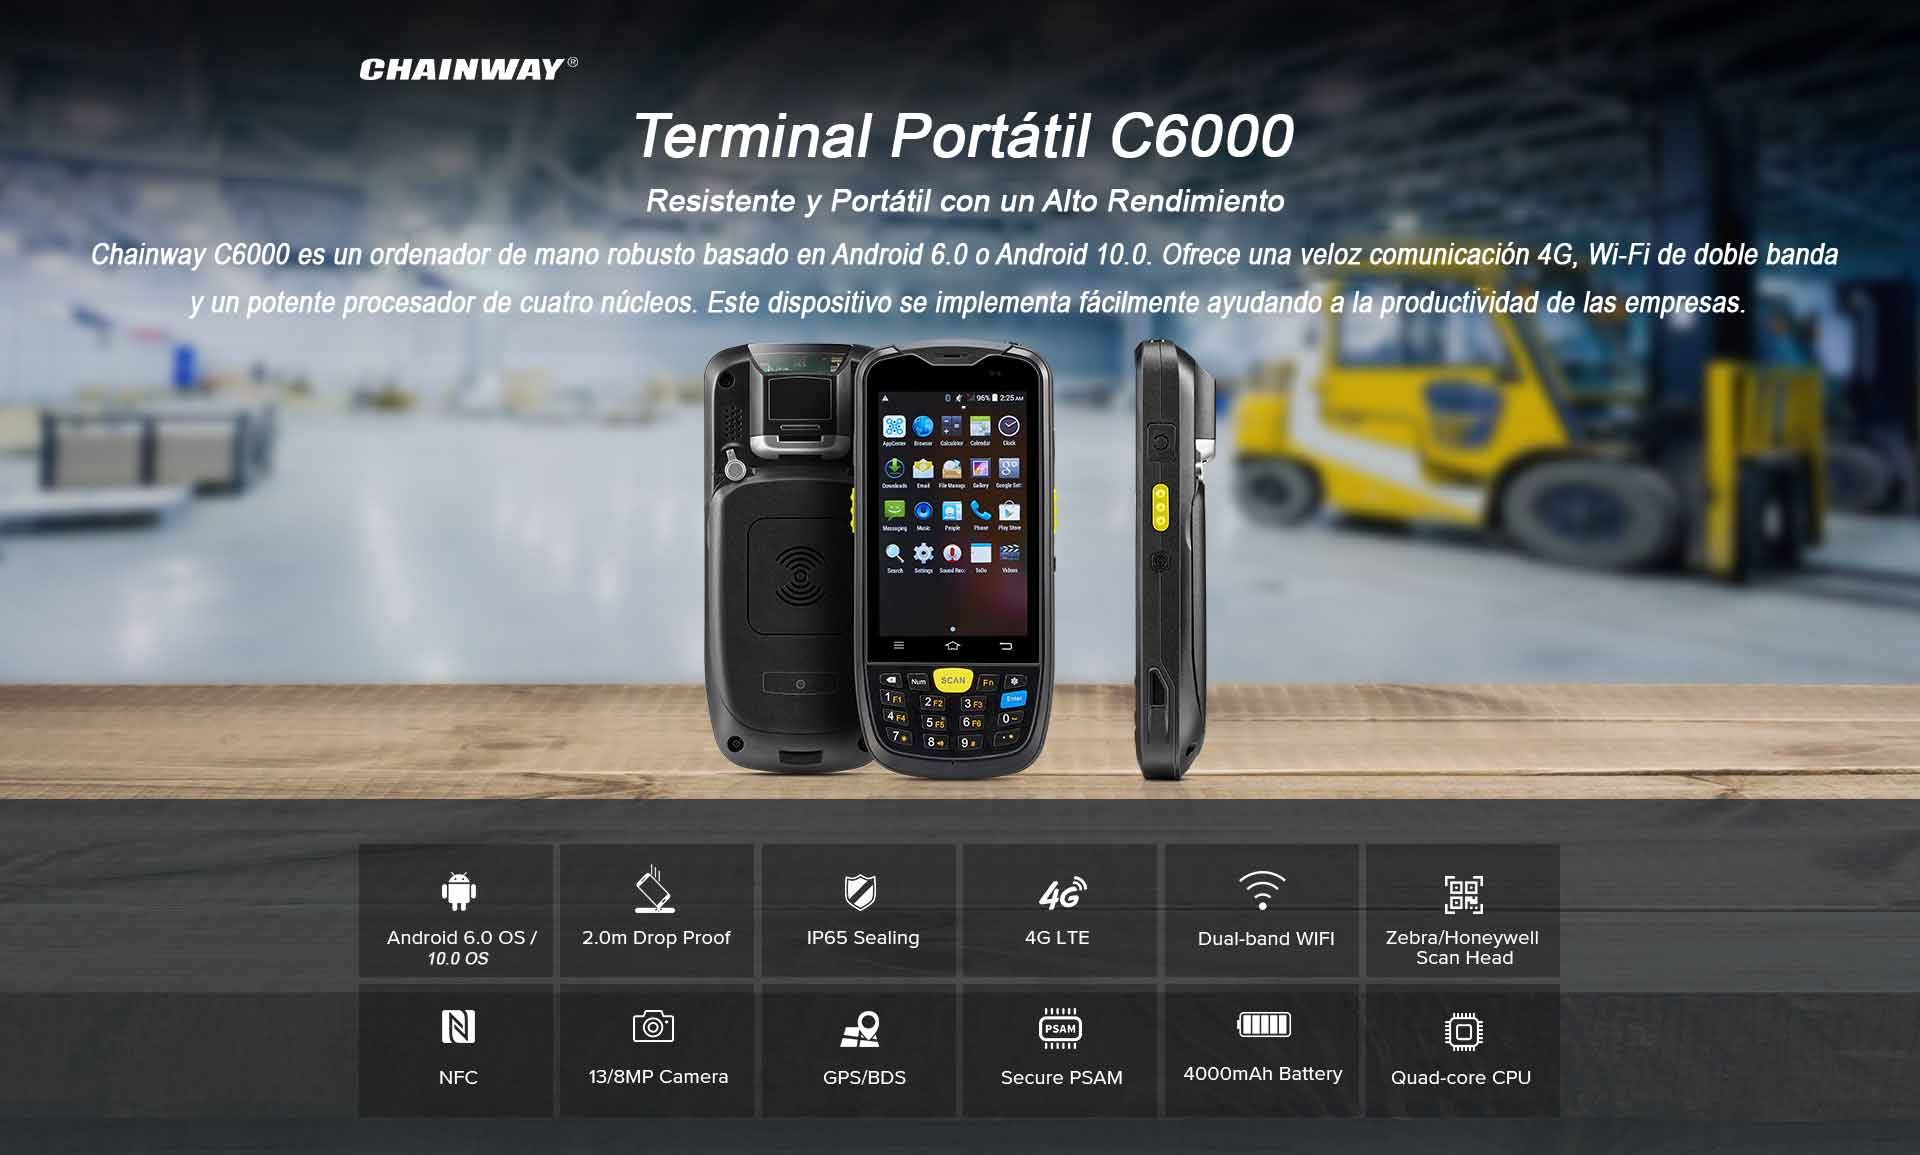 Terminal portatil C6000 Chainway Android